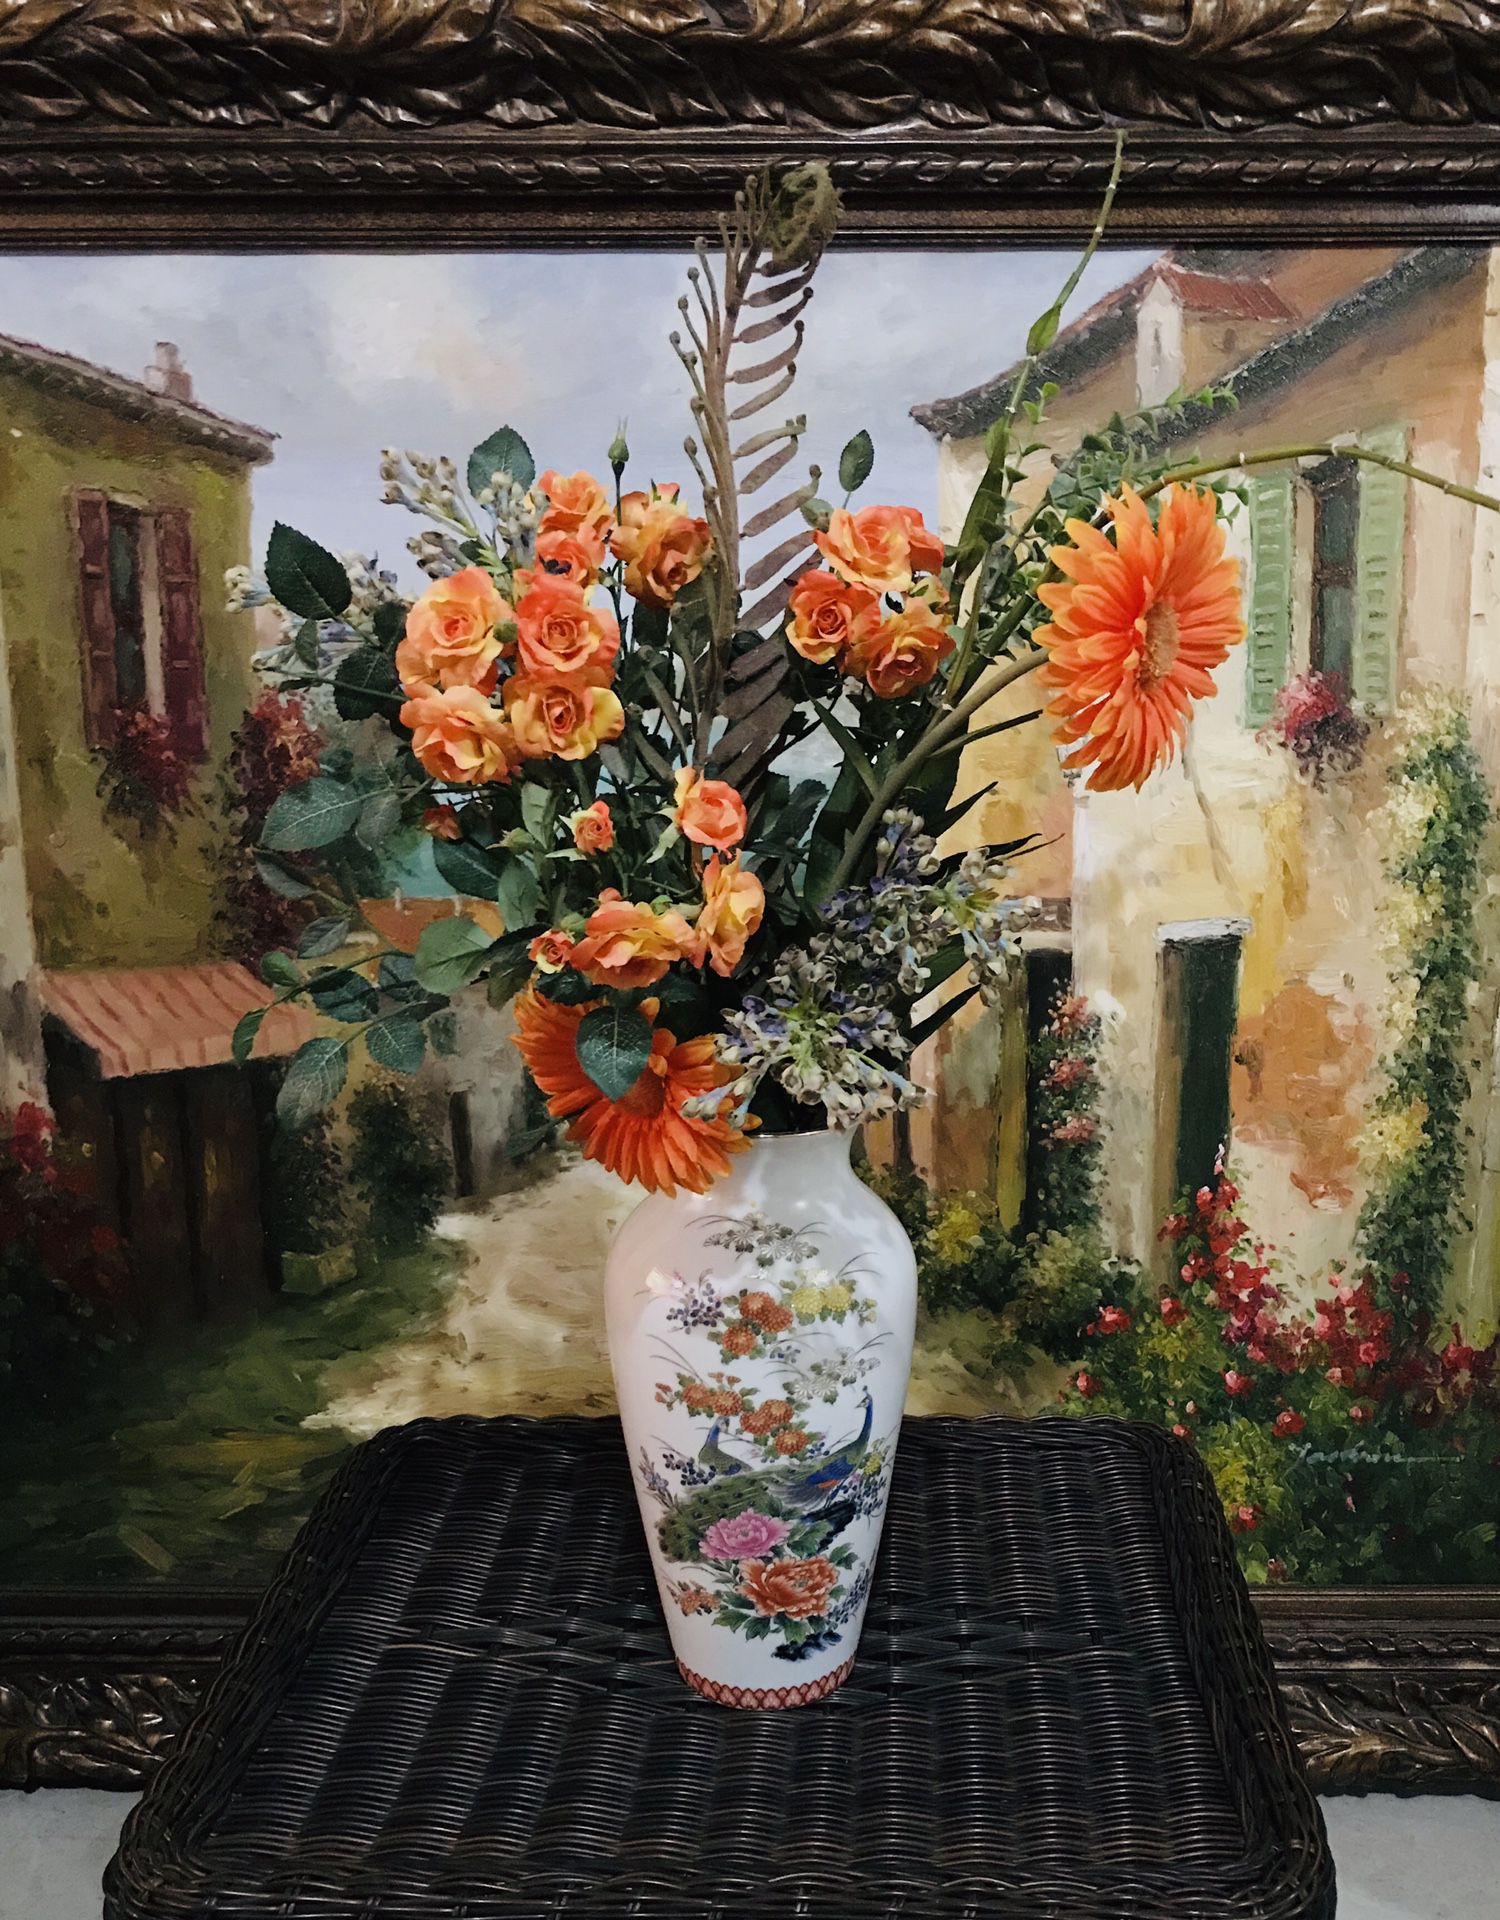 Flower arrangement with a beautiful Asian Vase